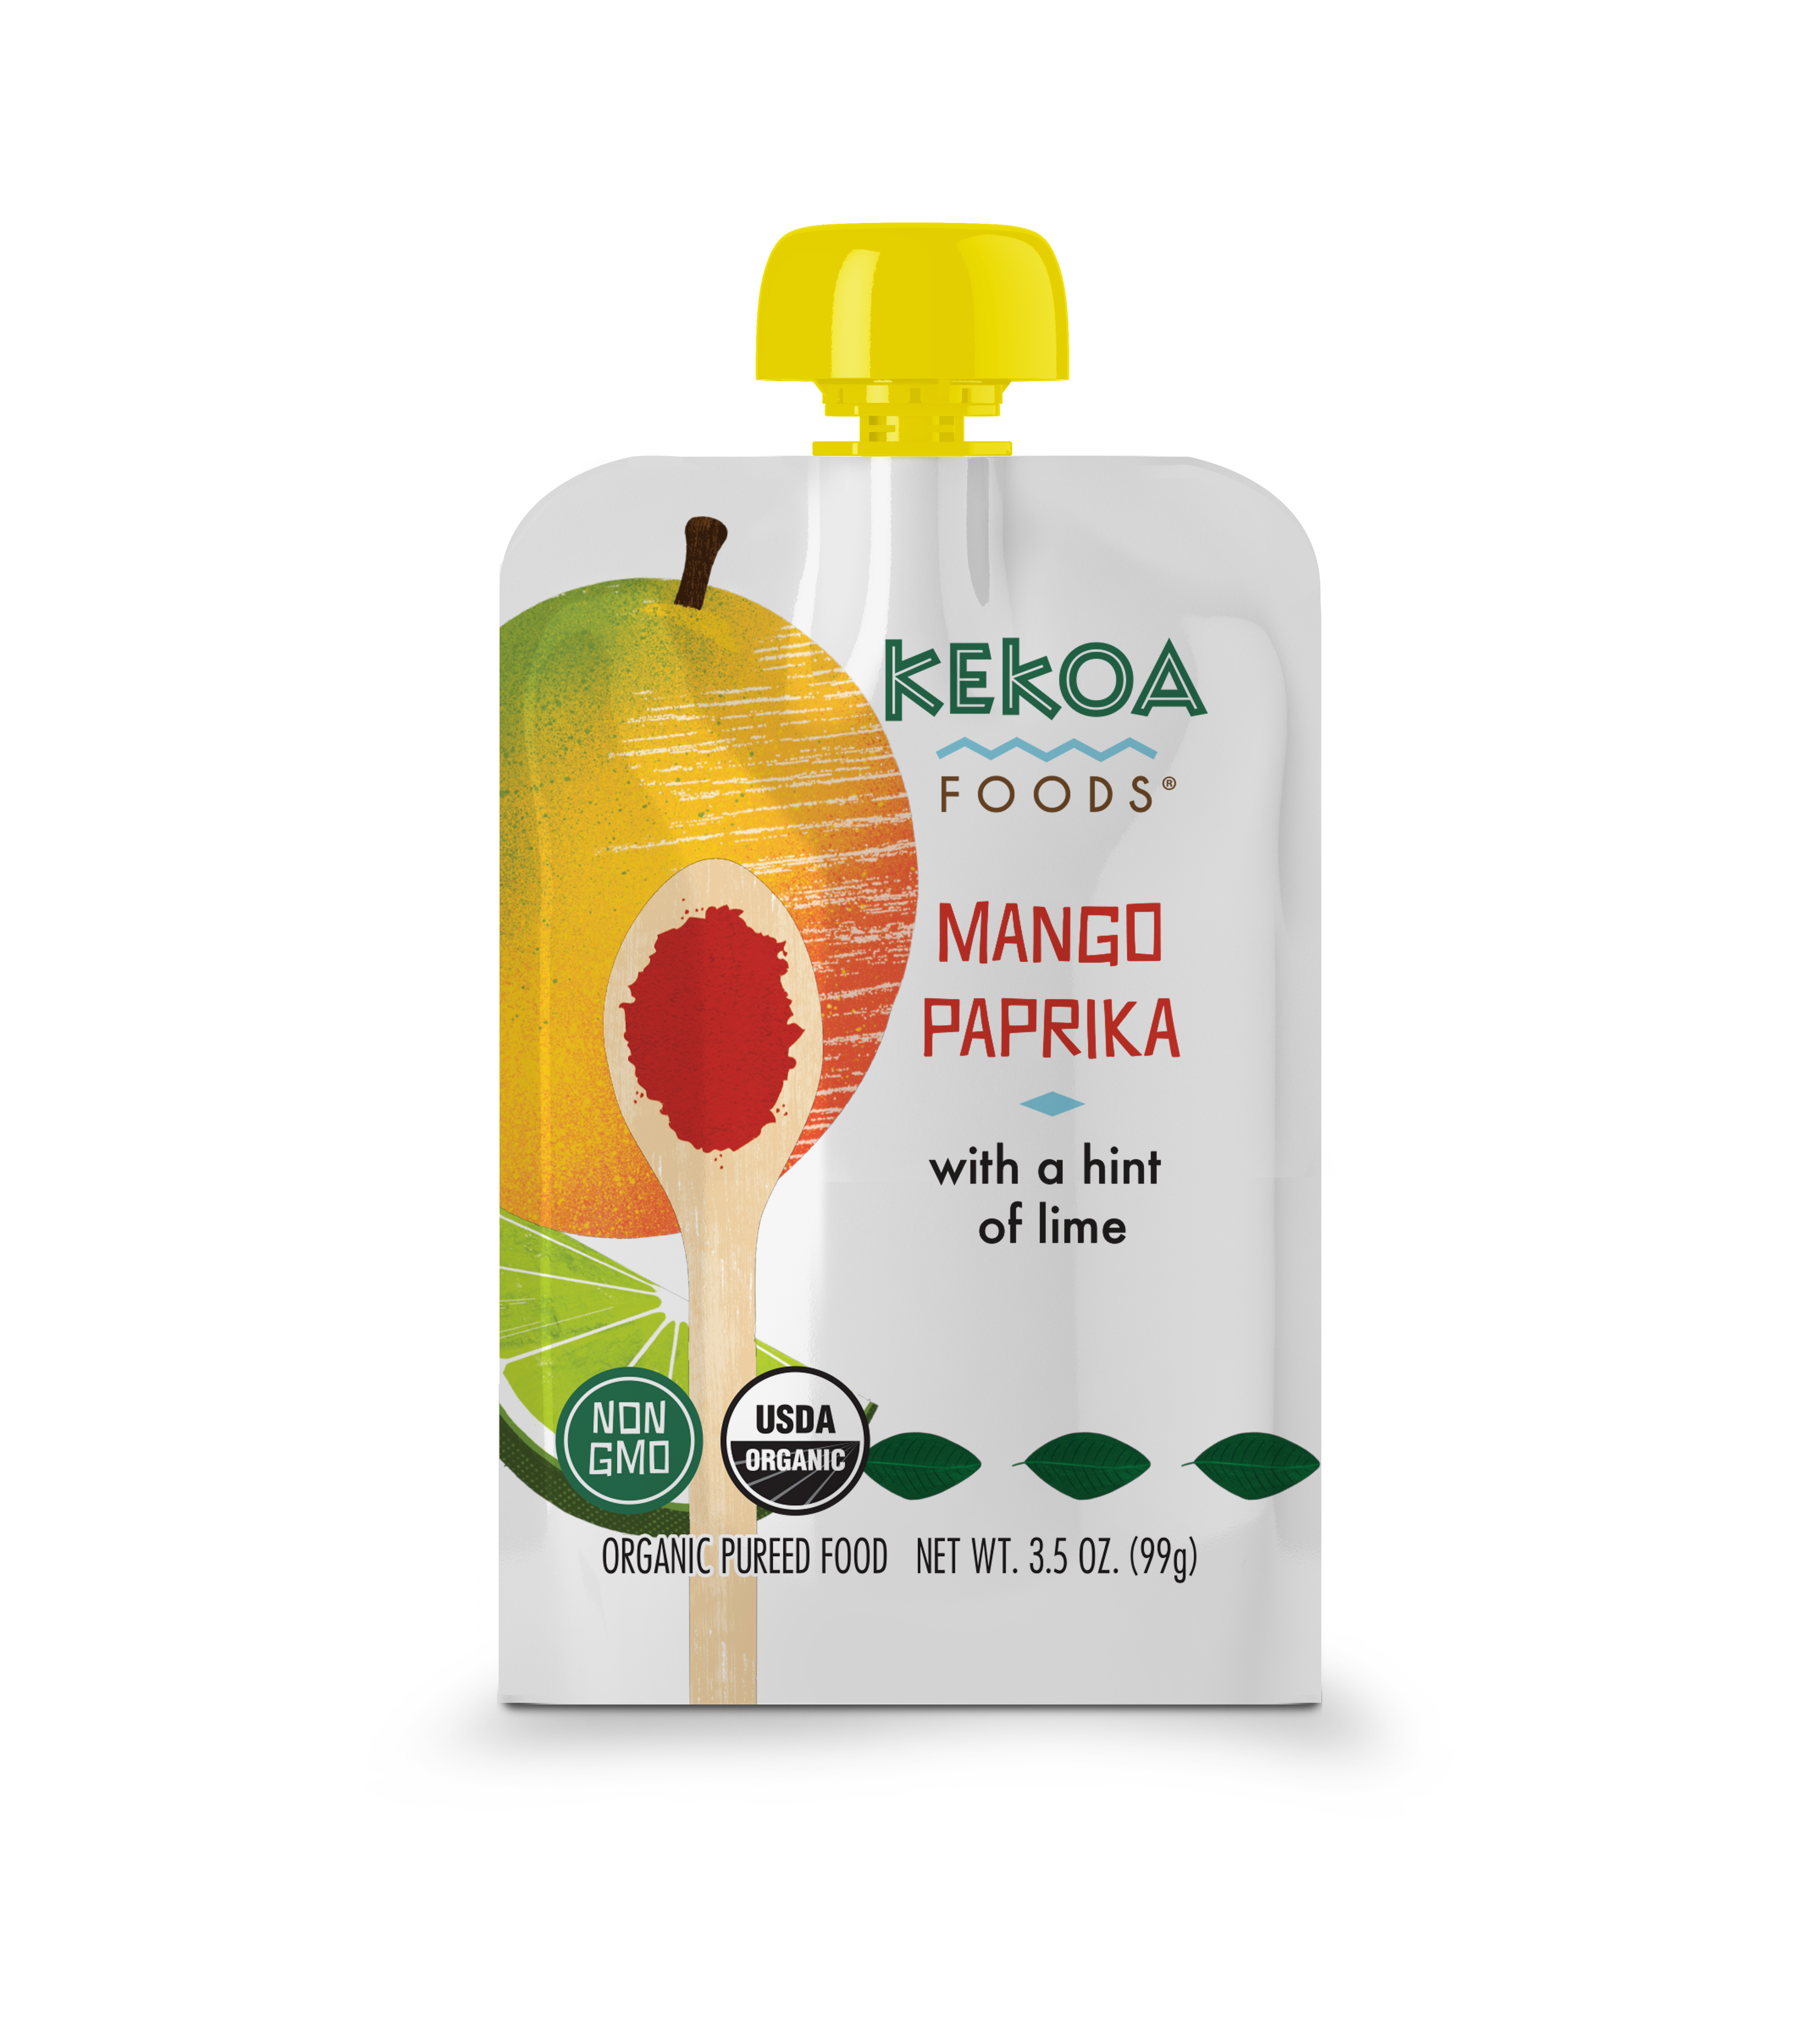 Kekoa Foods - Mango Paprika 6 innerpacks per case 3.5 oz